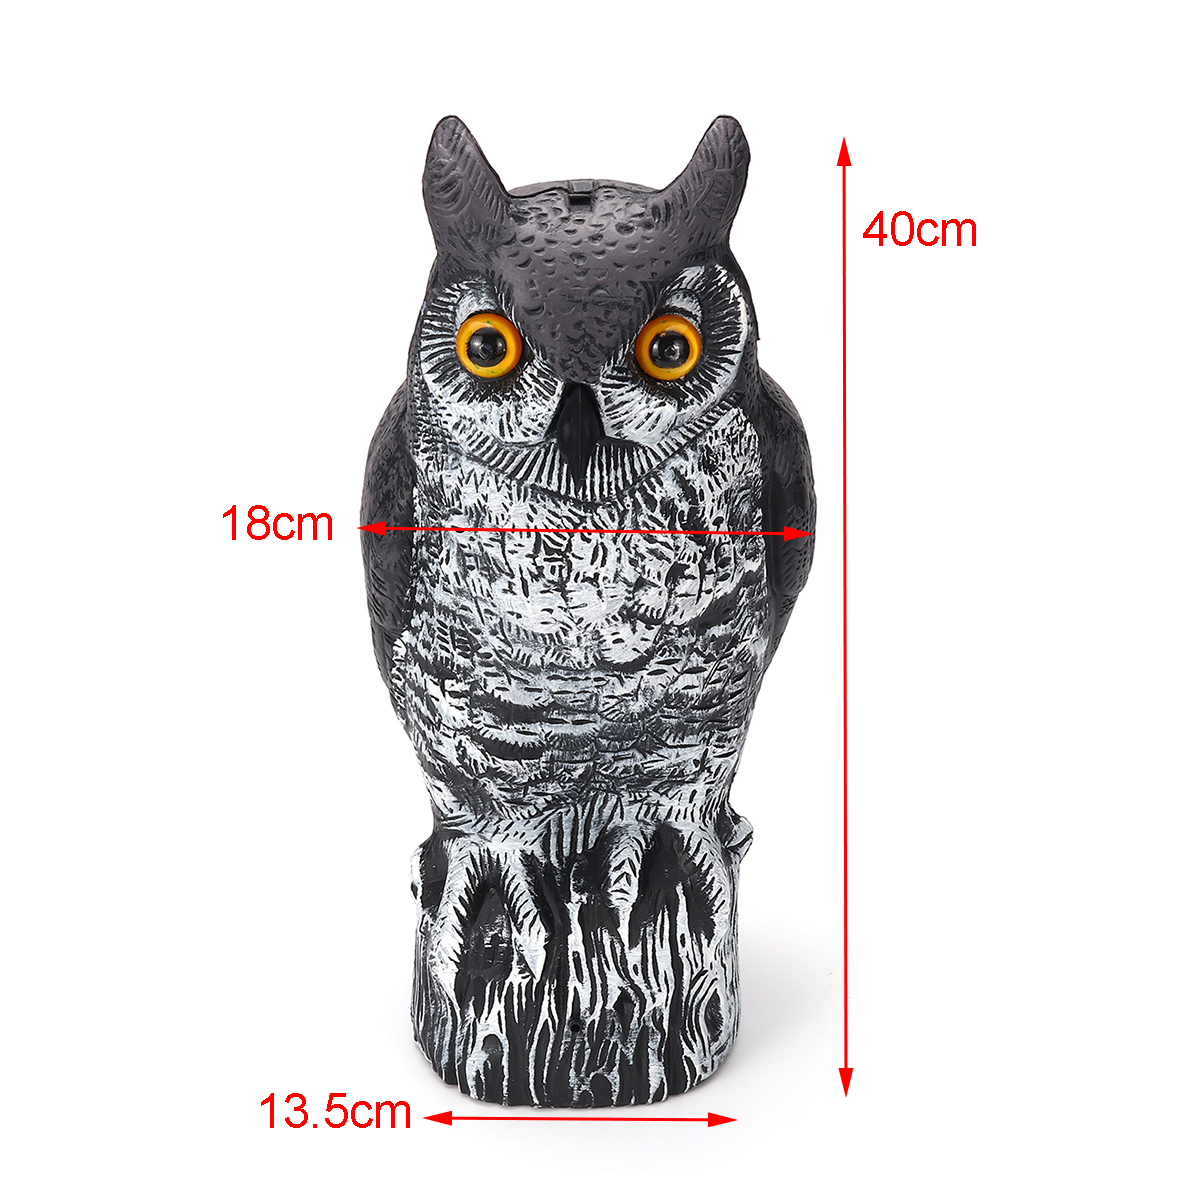 40cm-Electric-Induction-Sound-Illuminate-Hunting-Owl-Decoy-Garden-Decoration-1536372-4